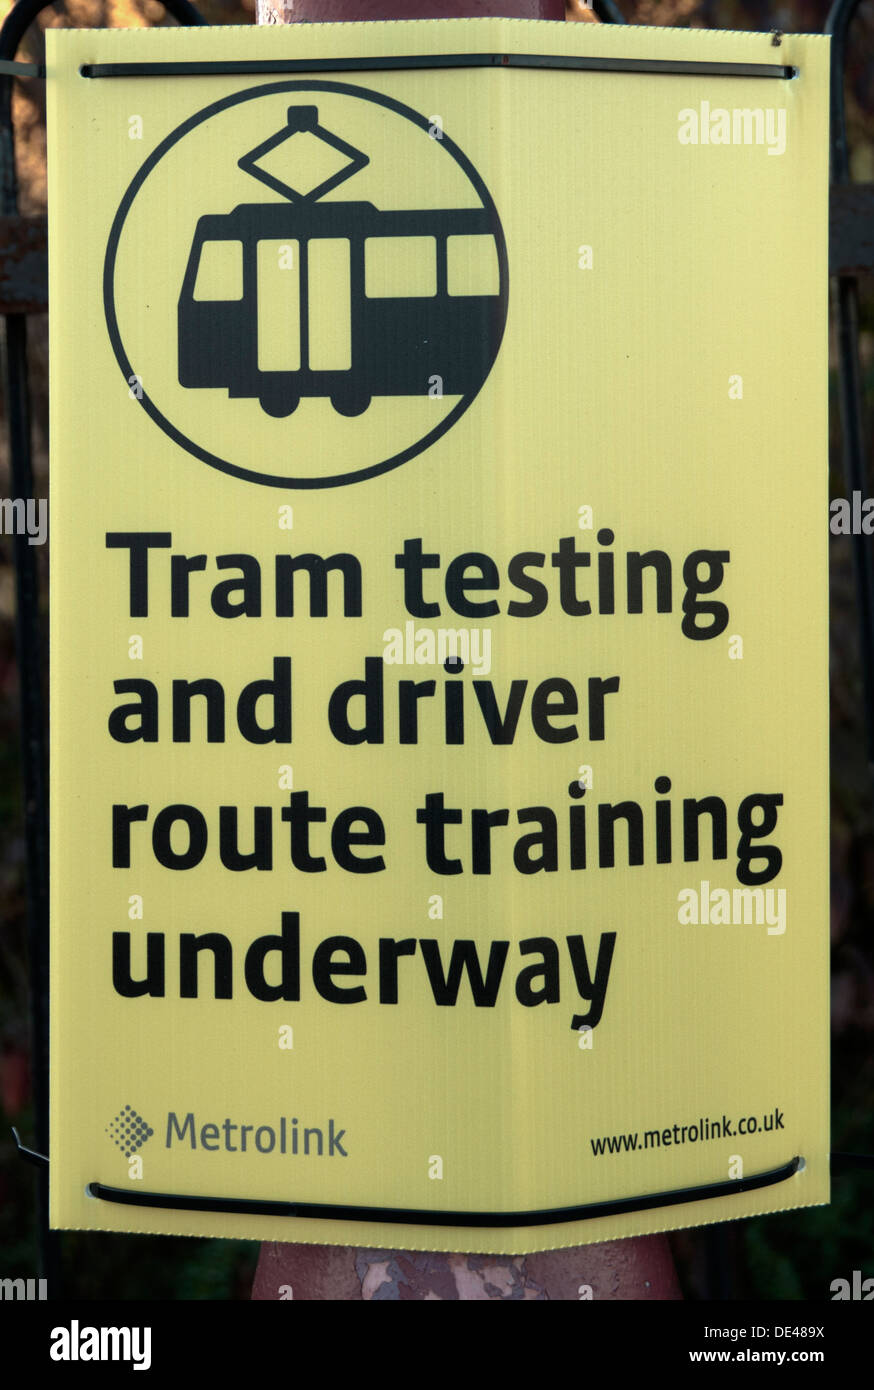 Metrolink tram testing and driver training sign, Manchester Road, Audenshaw, Tameside, Manchester, UK Stock Photo